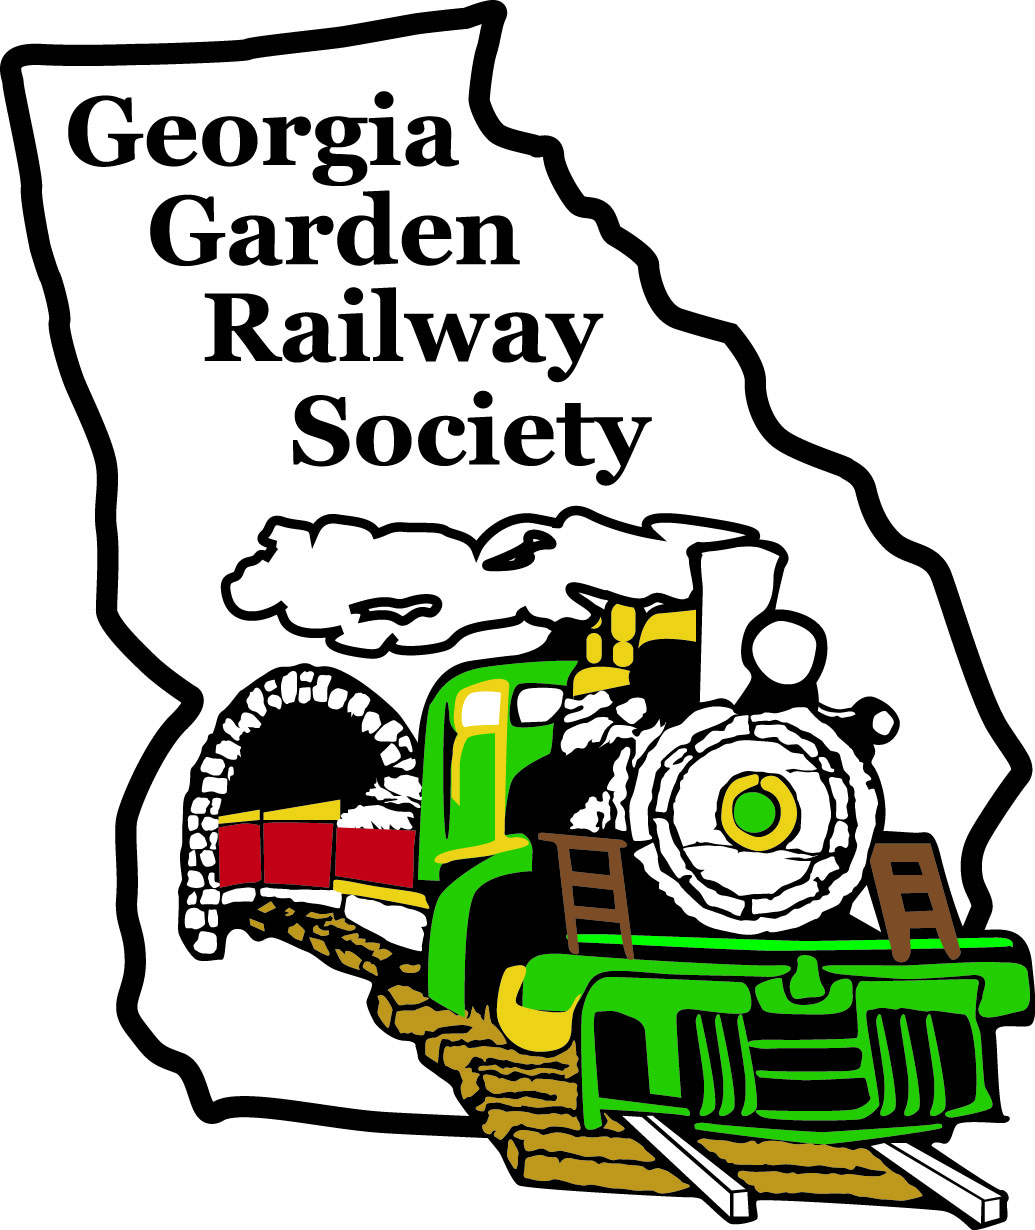 Georgia Garden Railway Society